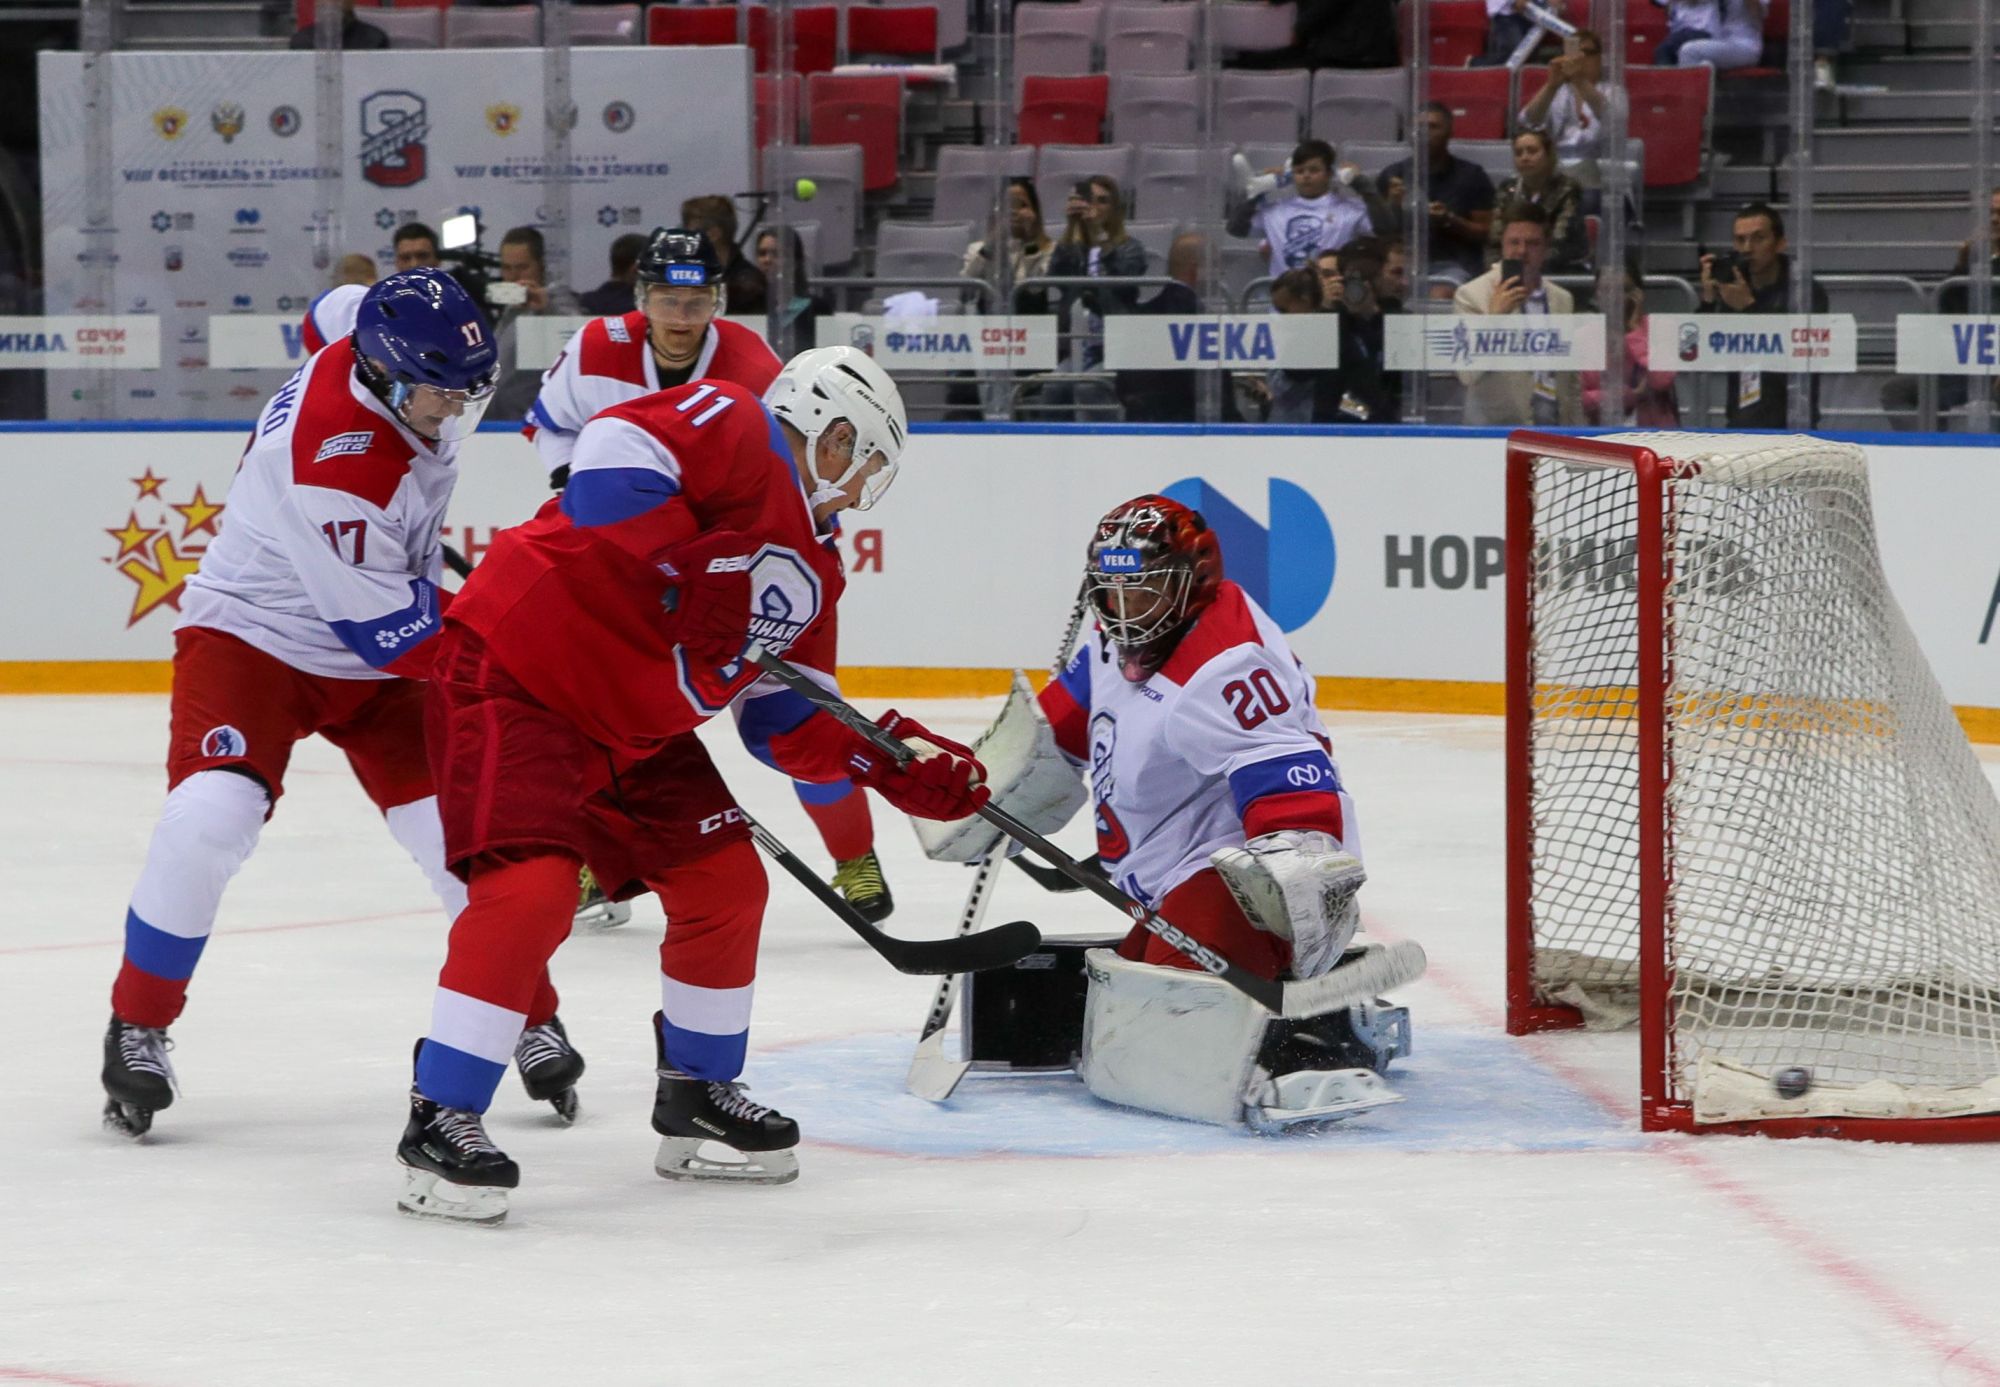 Putin puts his skates on for NHL, scores 8 goals (VIDEO) — RT